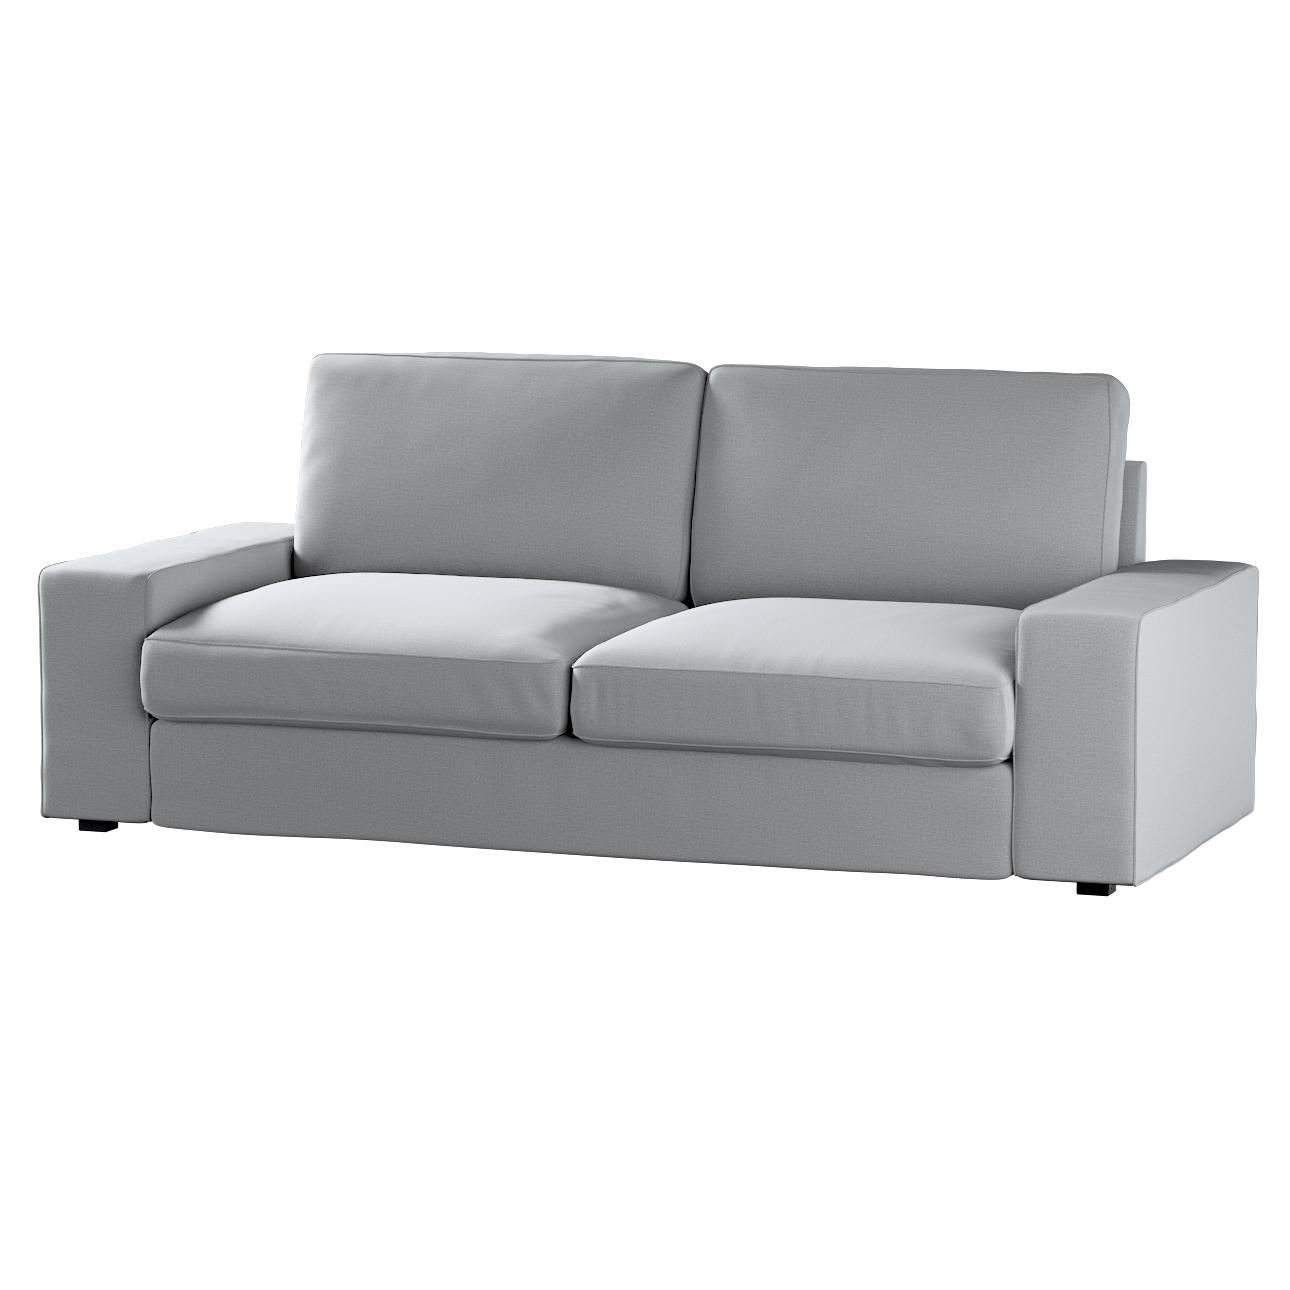 Bezug für Kivik 3-Sitzer Sofa, dunklegrau, Bezug für Sofa Kivik 3-Sitzer, I günstig online kaufen